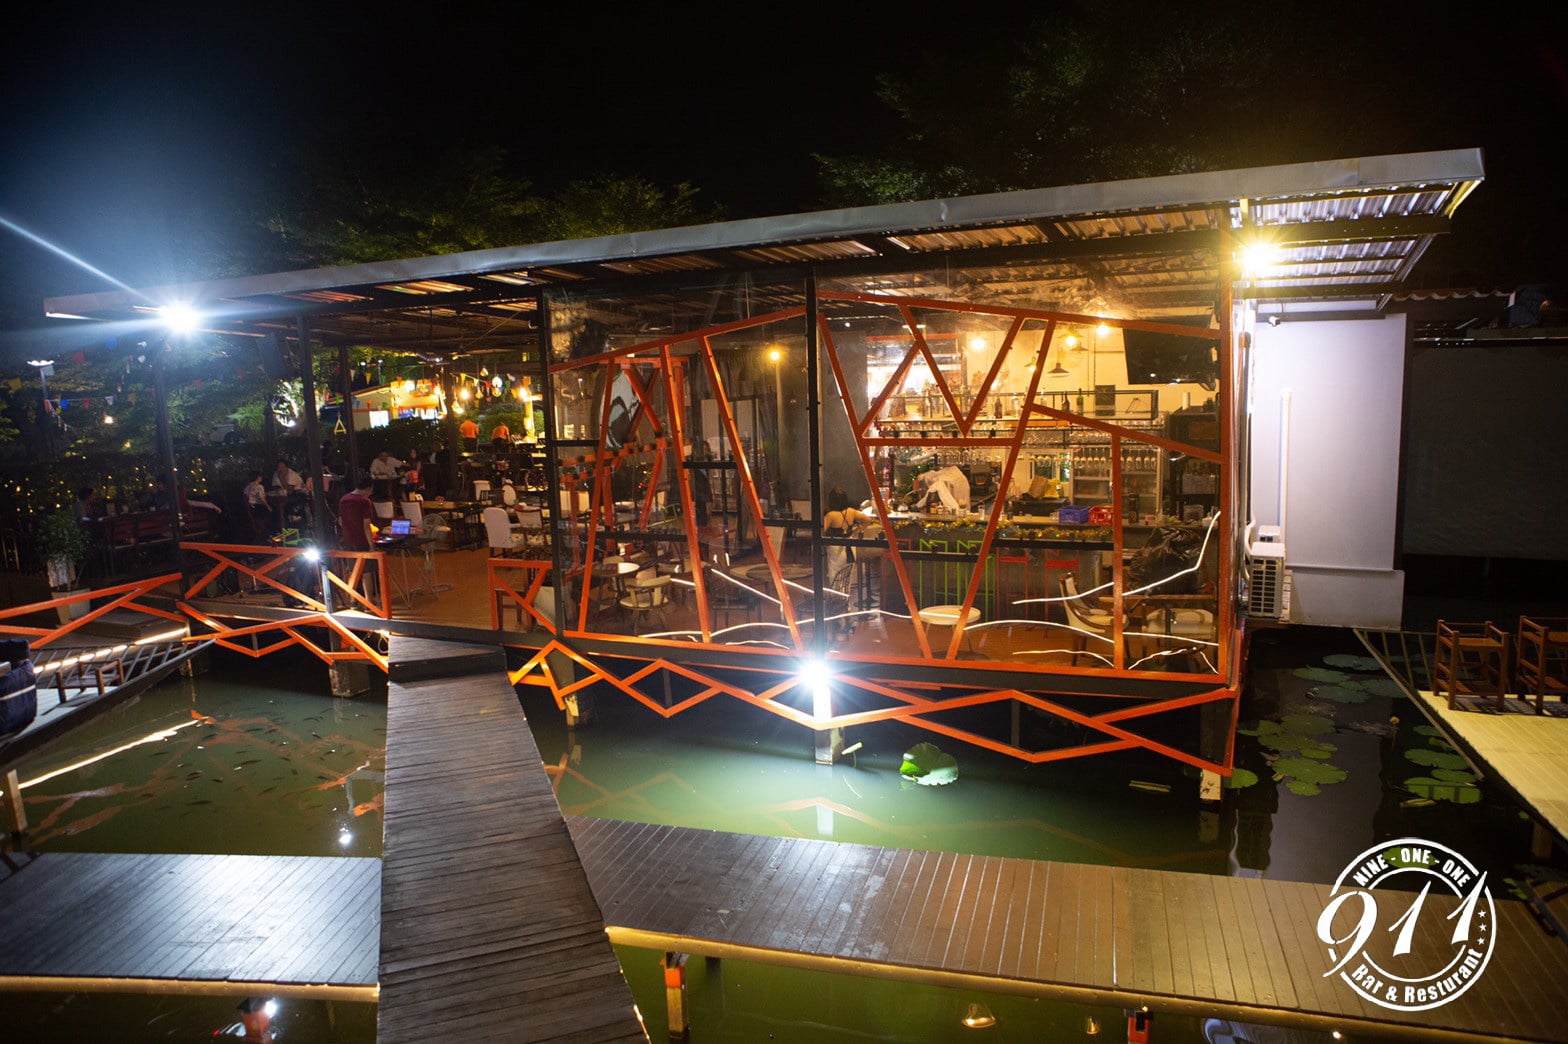 911 Bar & Restaurant (911 Bar & Restaurant) : Rayong (ระยอง)